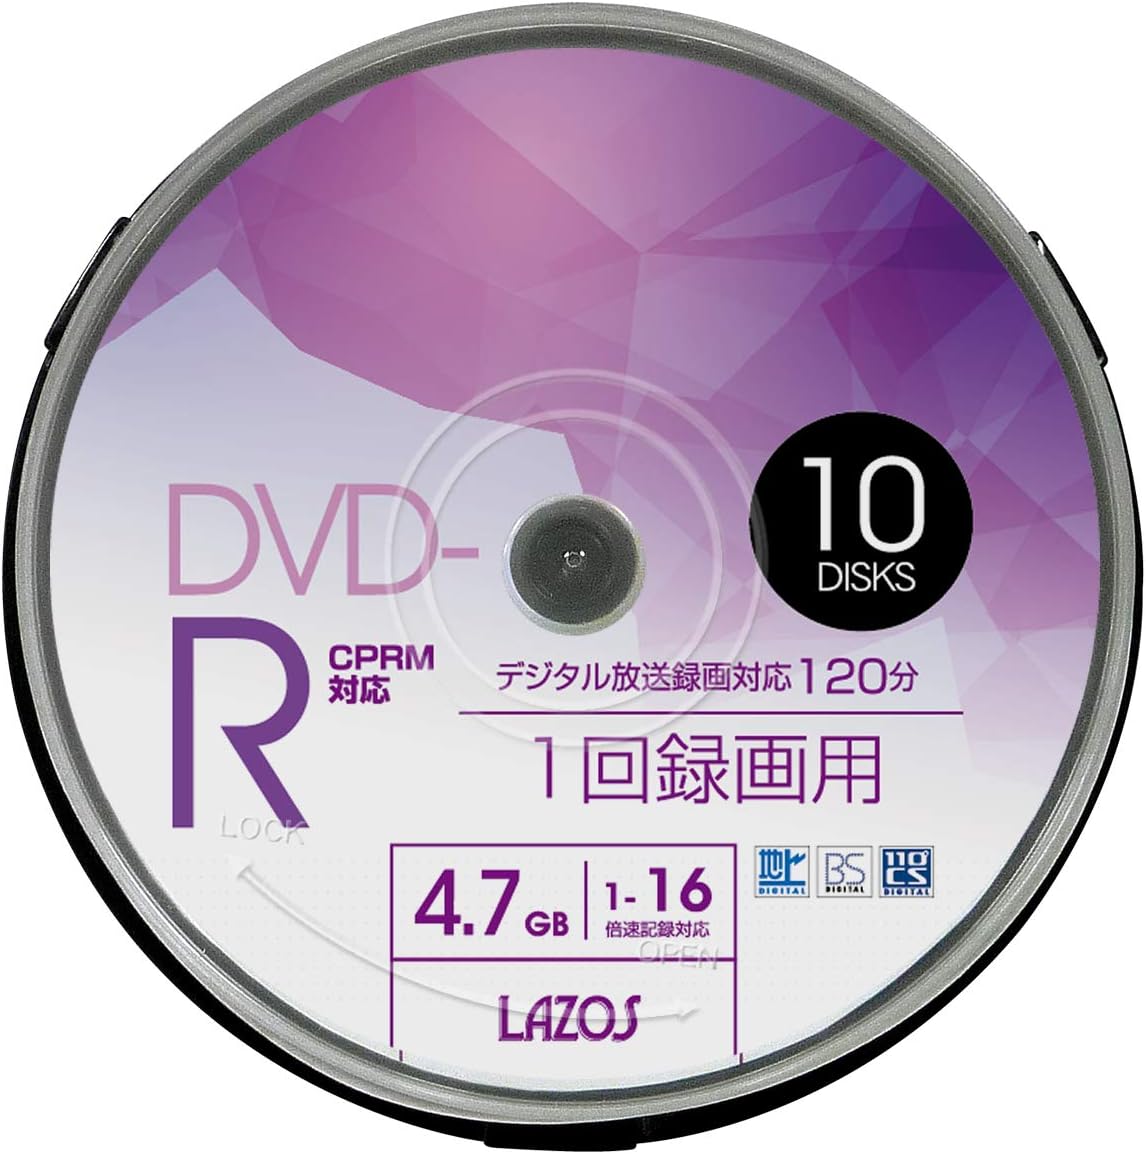 Lazos DVD-R 4.7GB for VIDEO CPRM対応 1-16倍